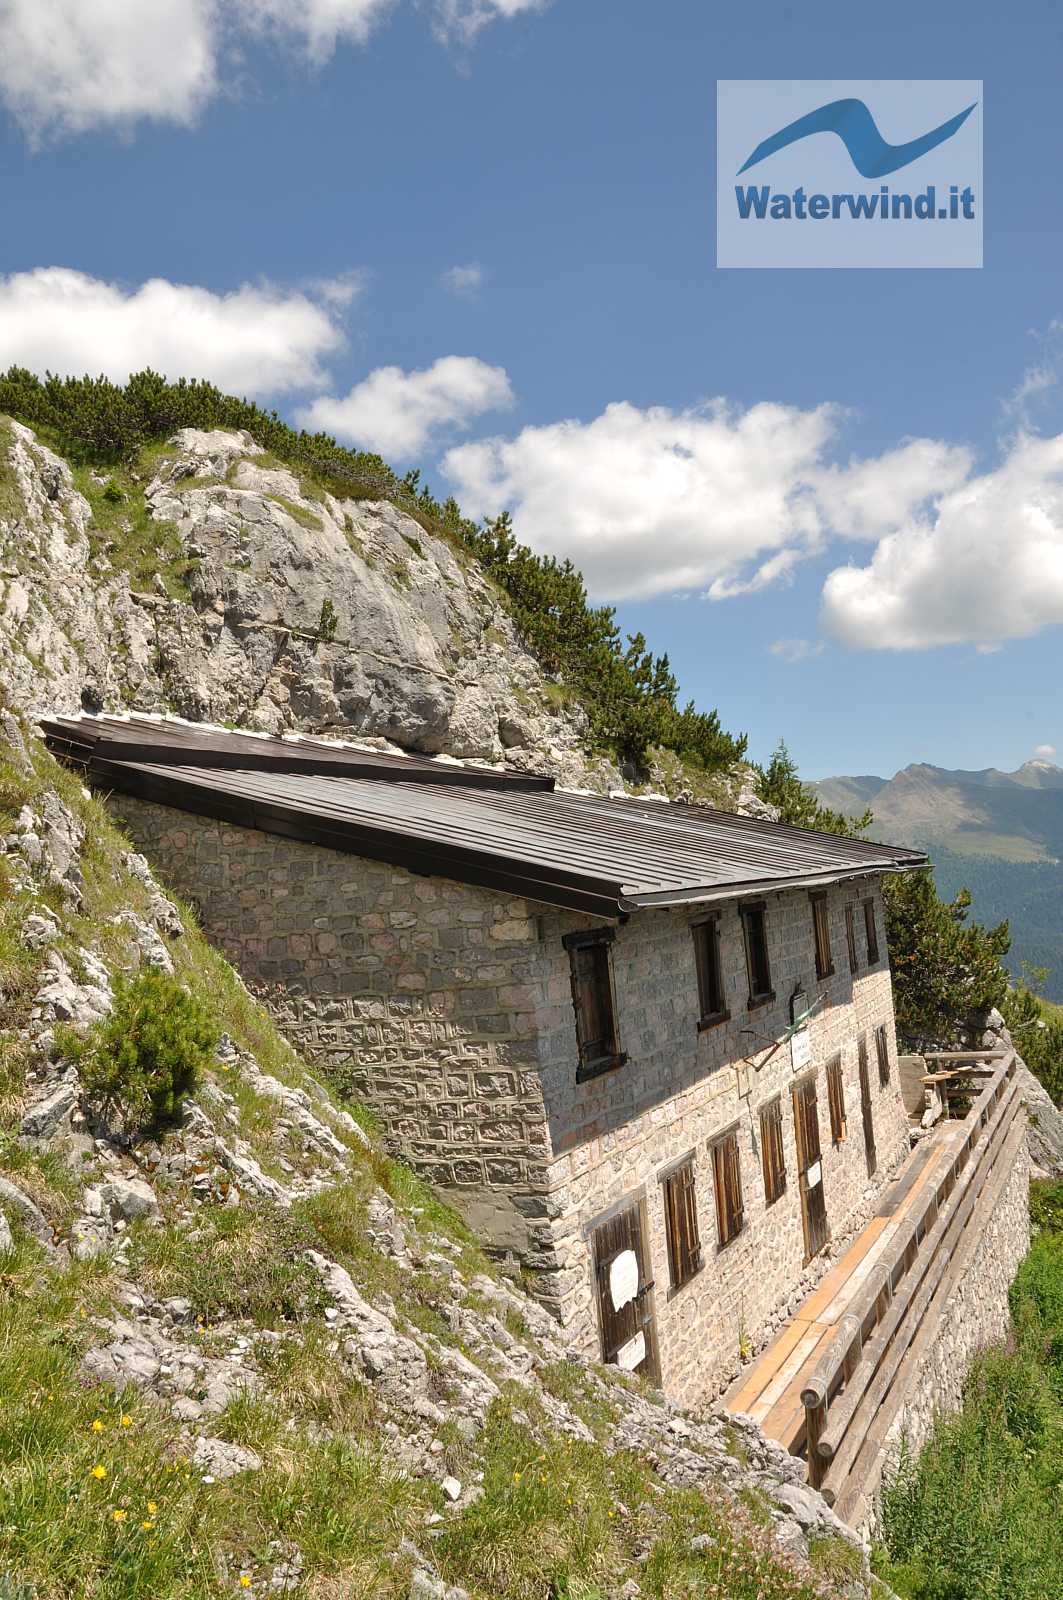 Trekking: Anello Vallon Popera (Dolomites)